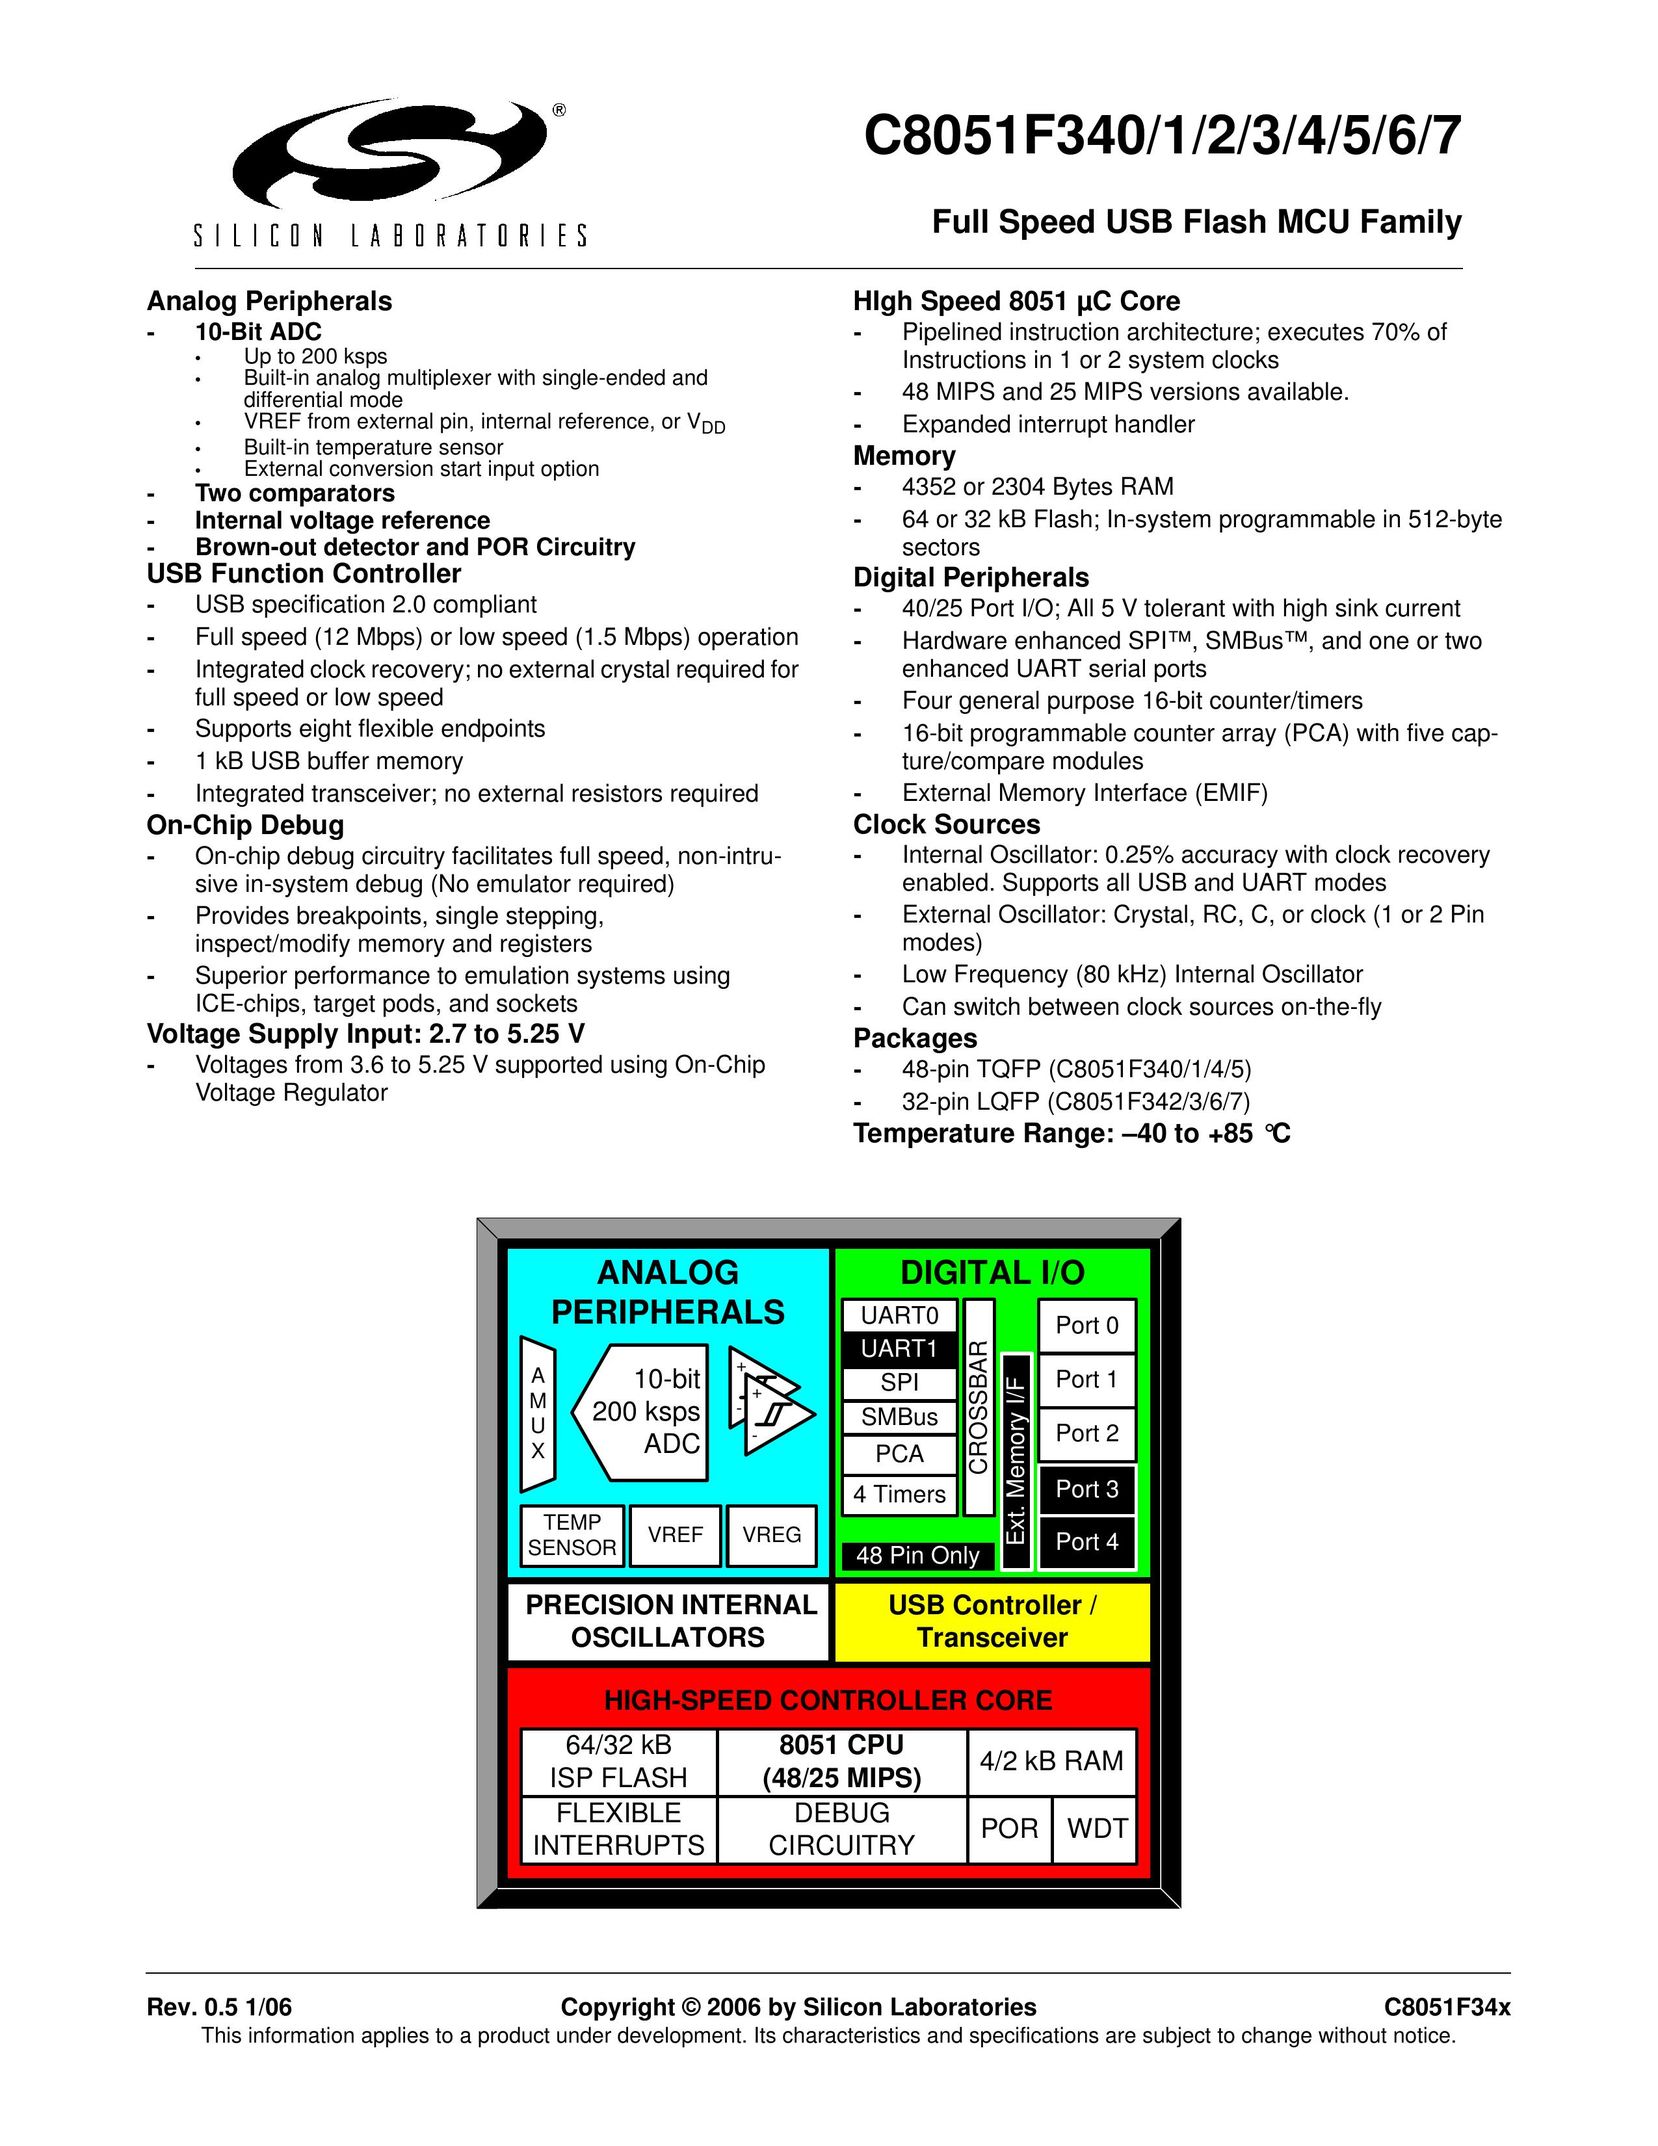 Silicon Laboratories C8051F344 Two-Way Radio User Manual